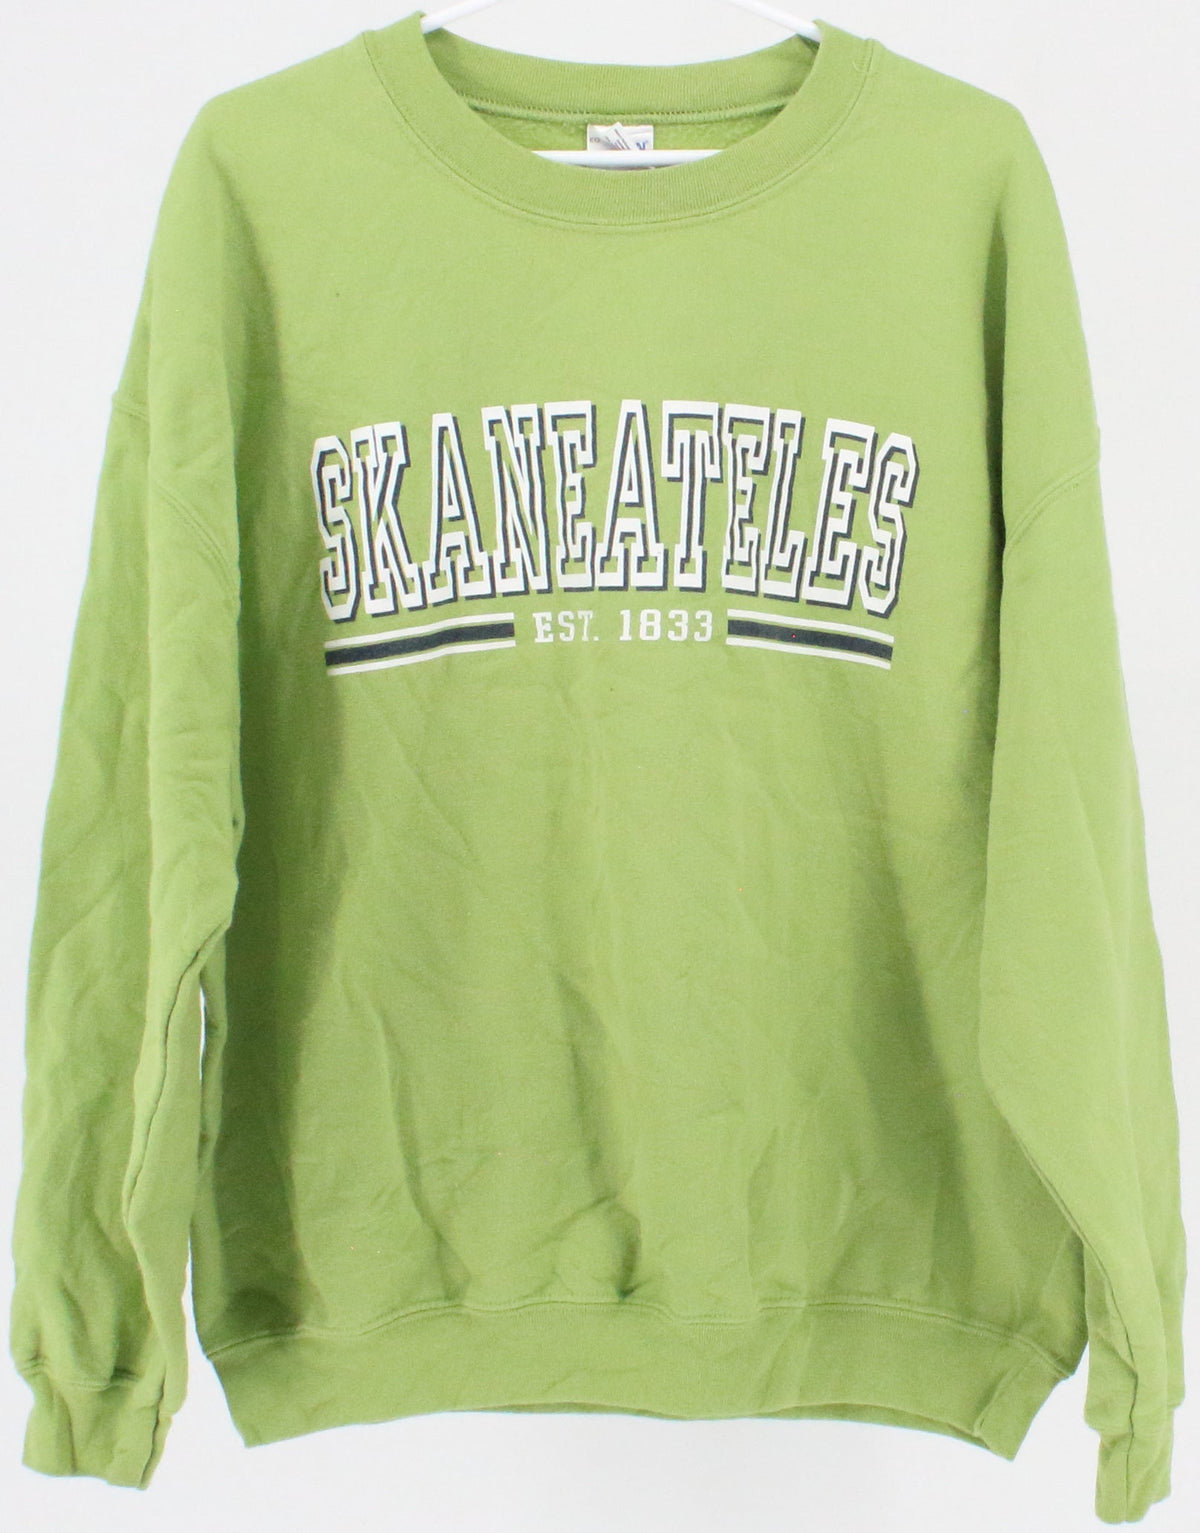 Gildan Skaneateles Green Sweatshirt